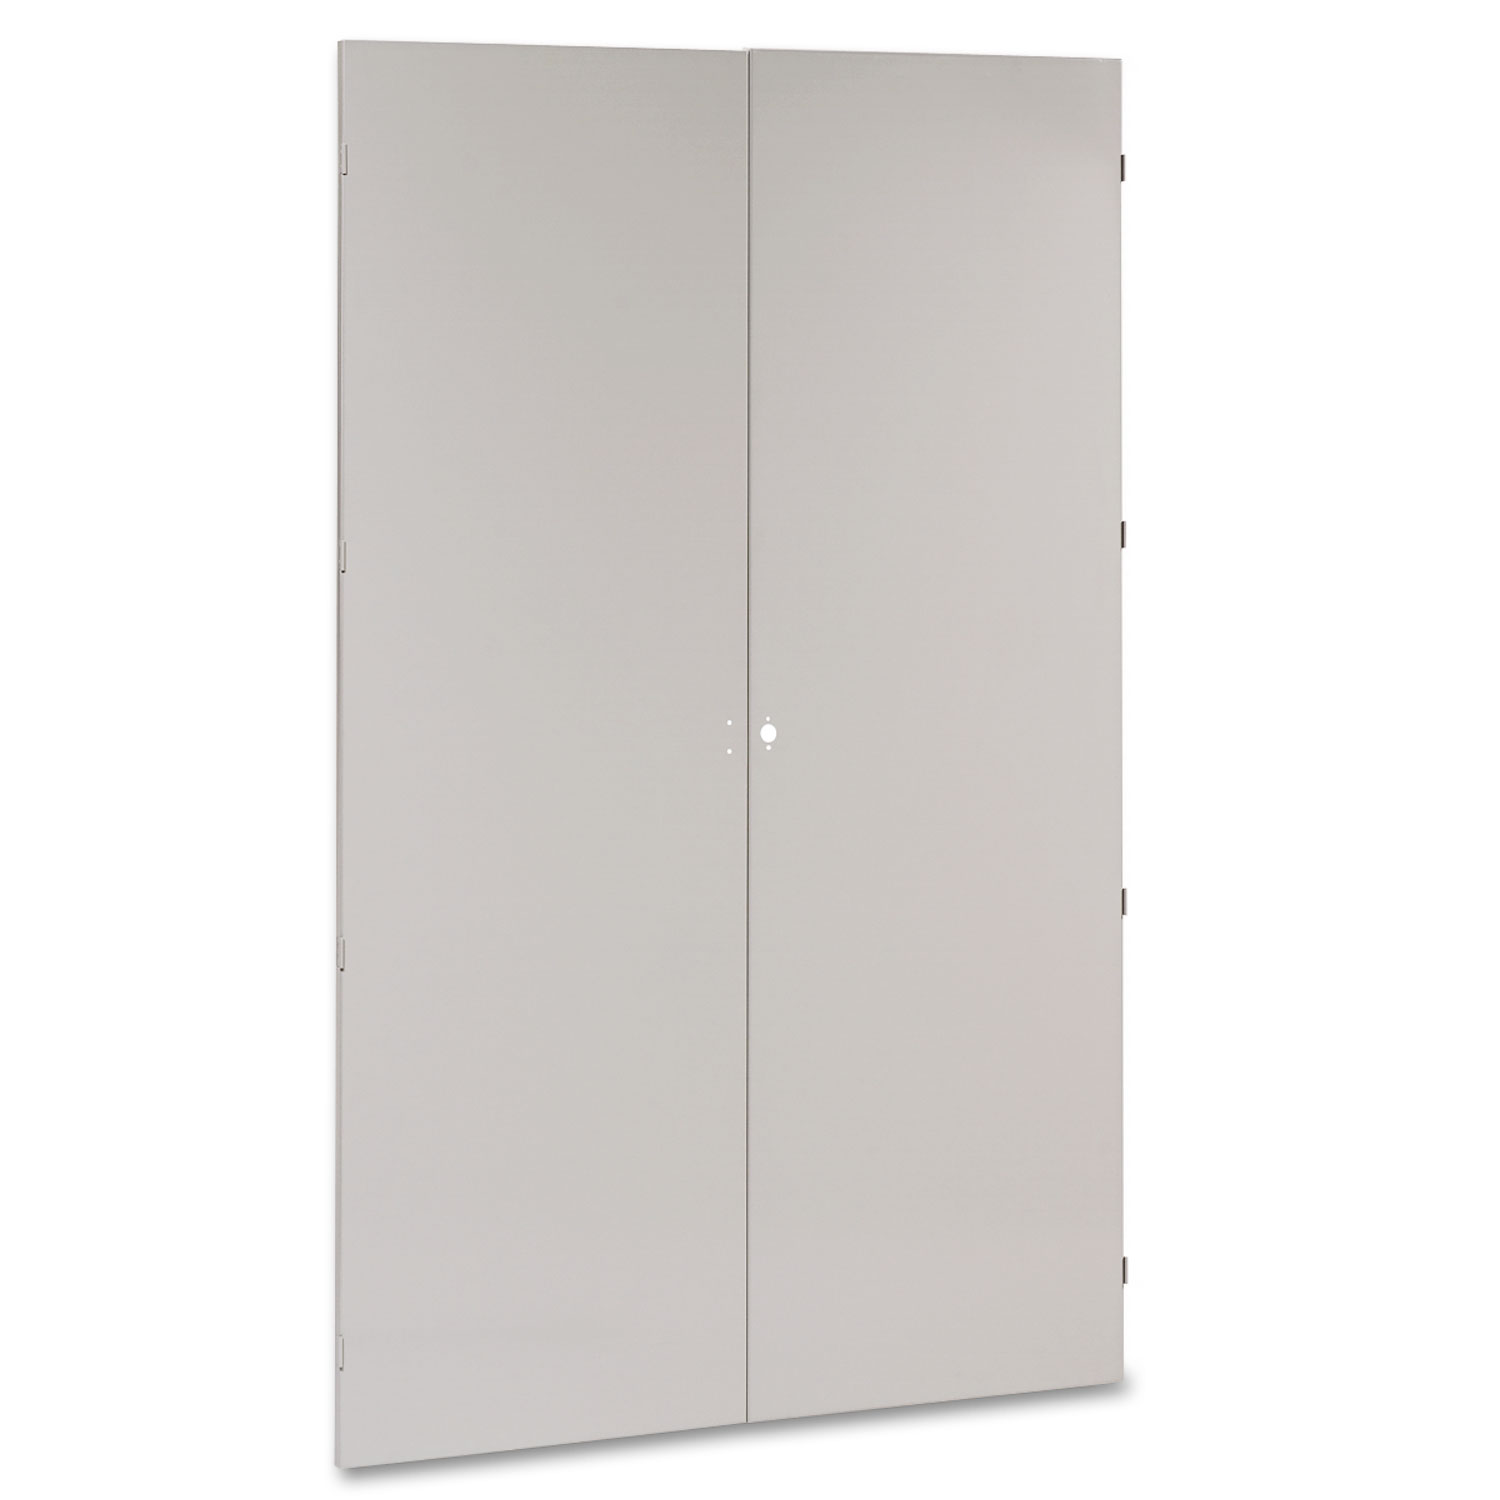 Jumbo Cabinets, Box 1 of 2, 48w x 24d x 78h, Light Gray